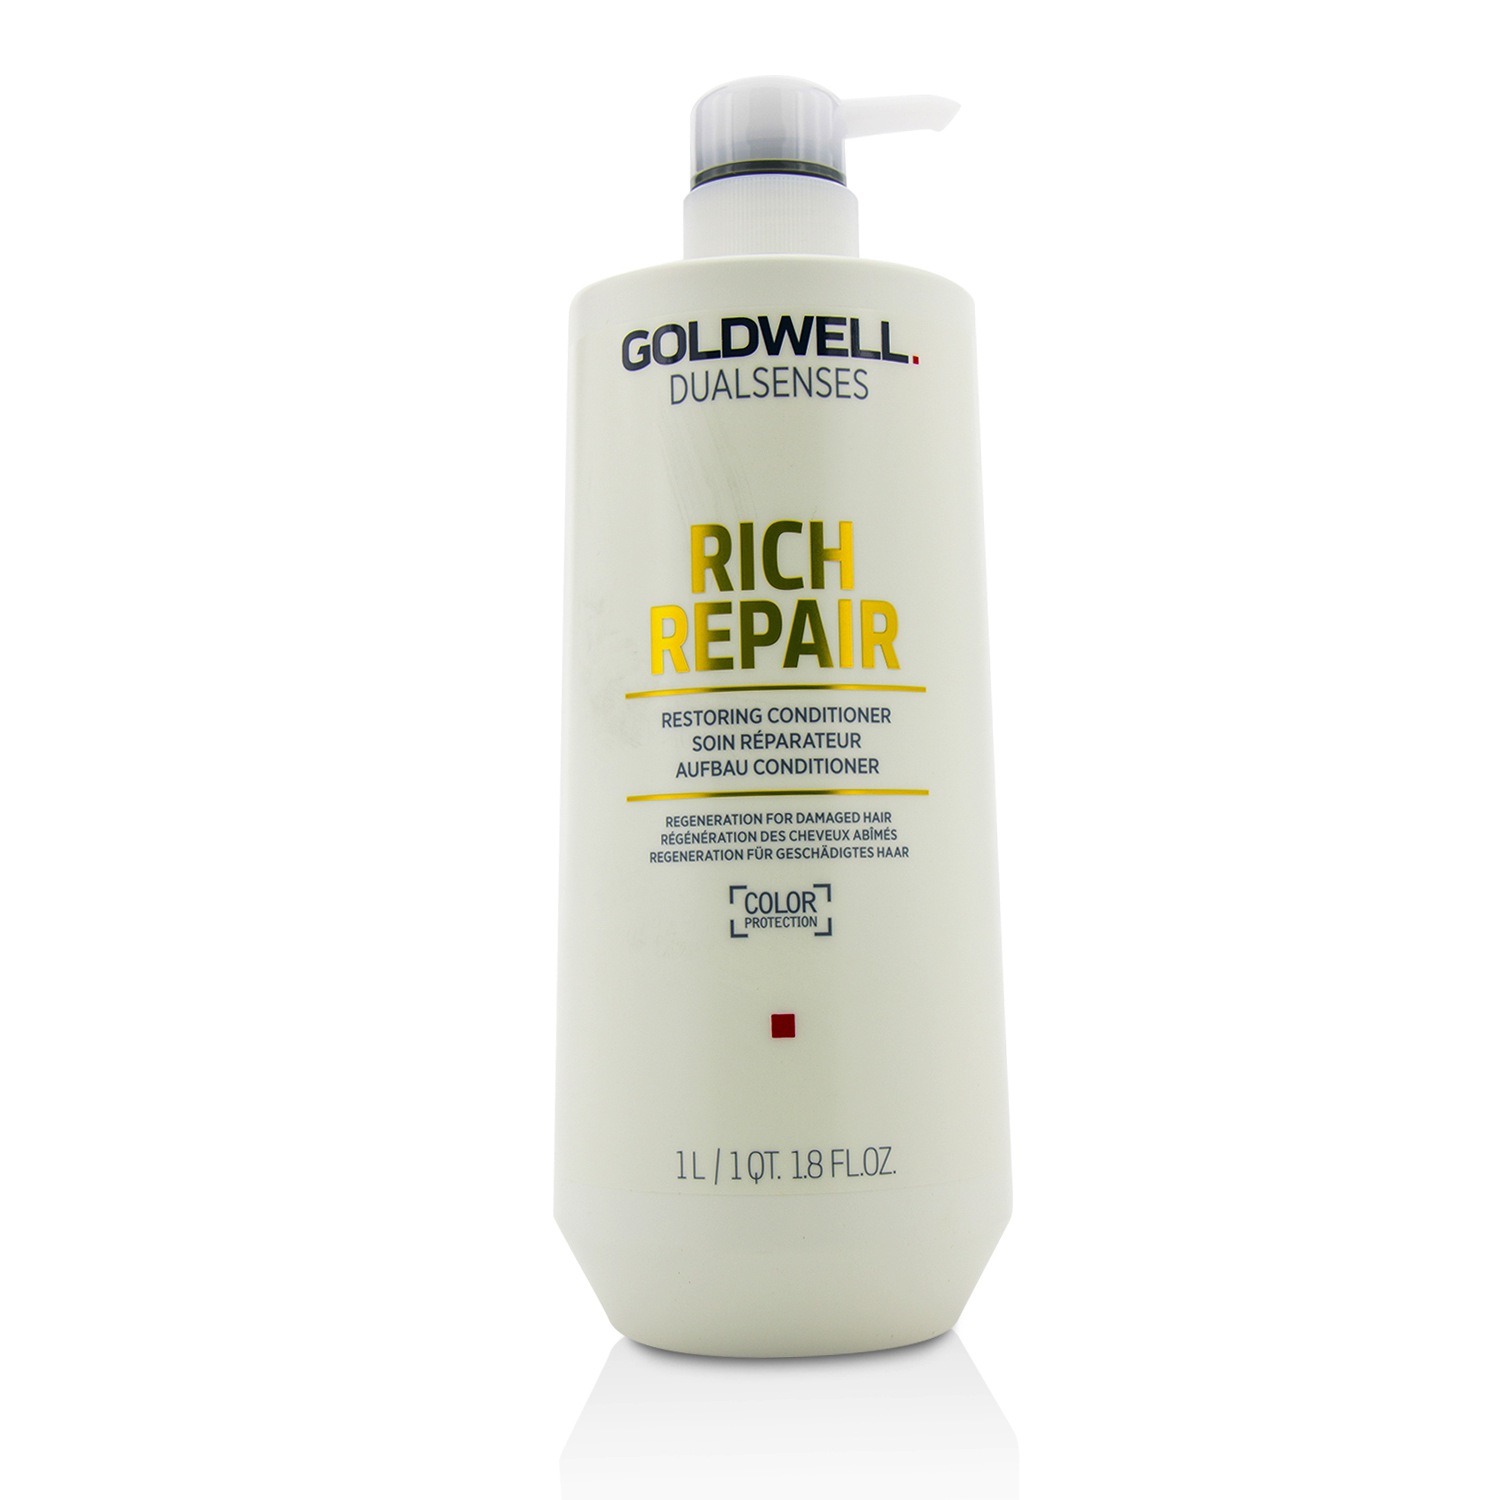 Dual Senses Rich Repair Restoring Conditioner (Regeneration For Damaged Hair) Goldwell Image